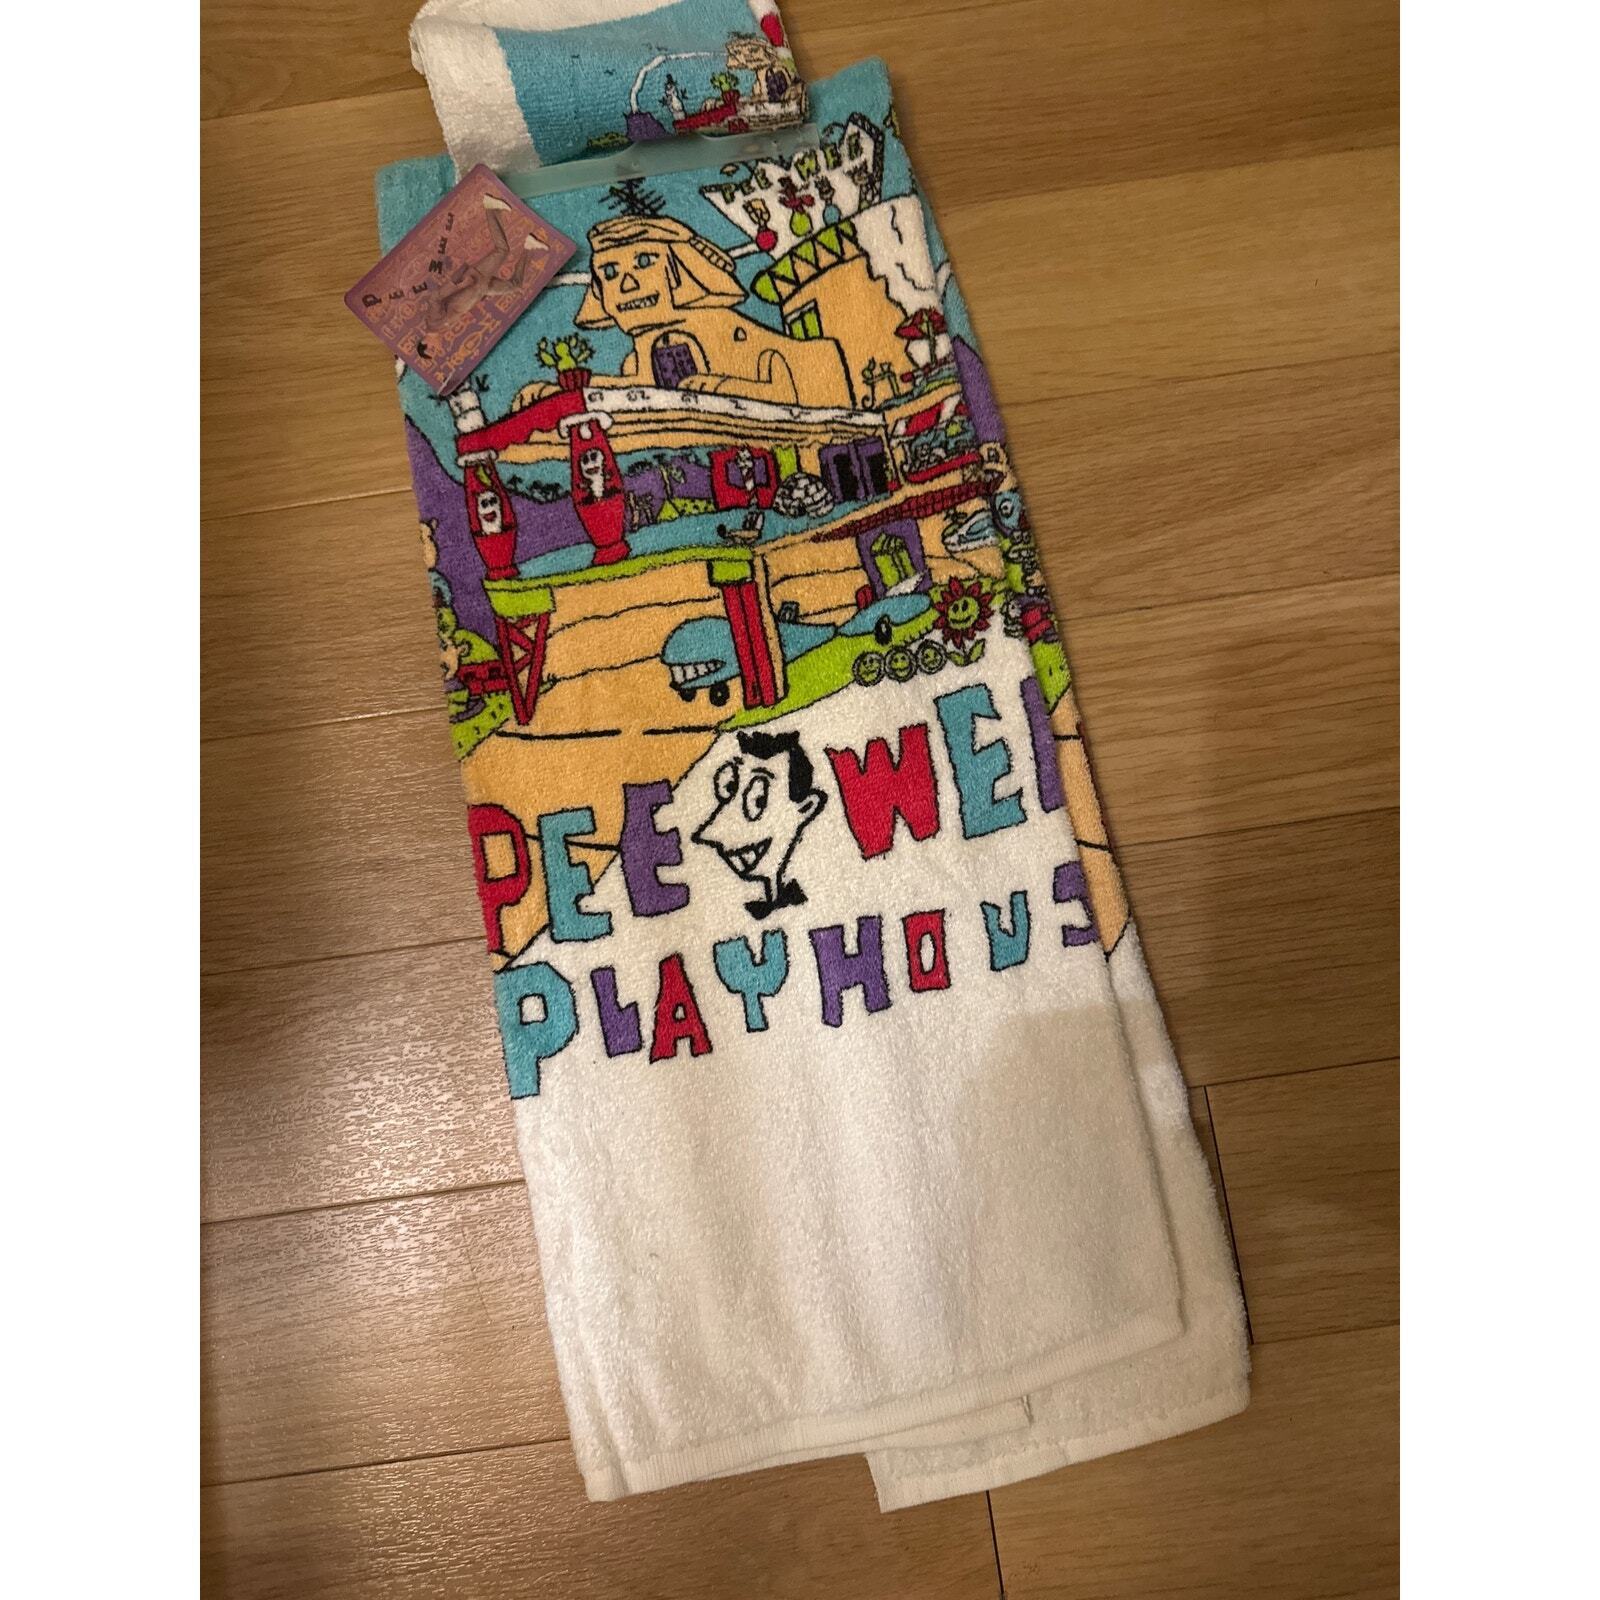 Vintage 1989 two-piece Pee-wee Herman Playhouse towel set with tags